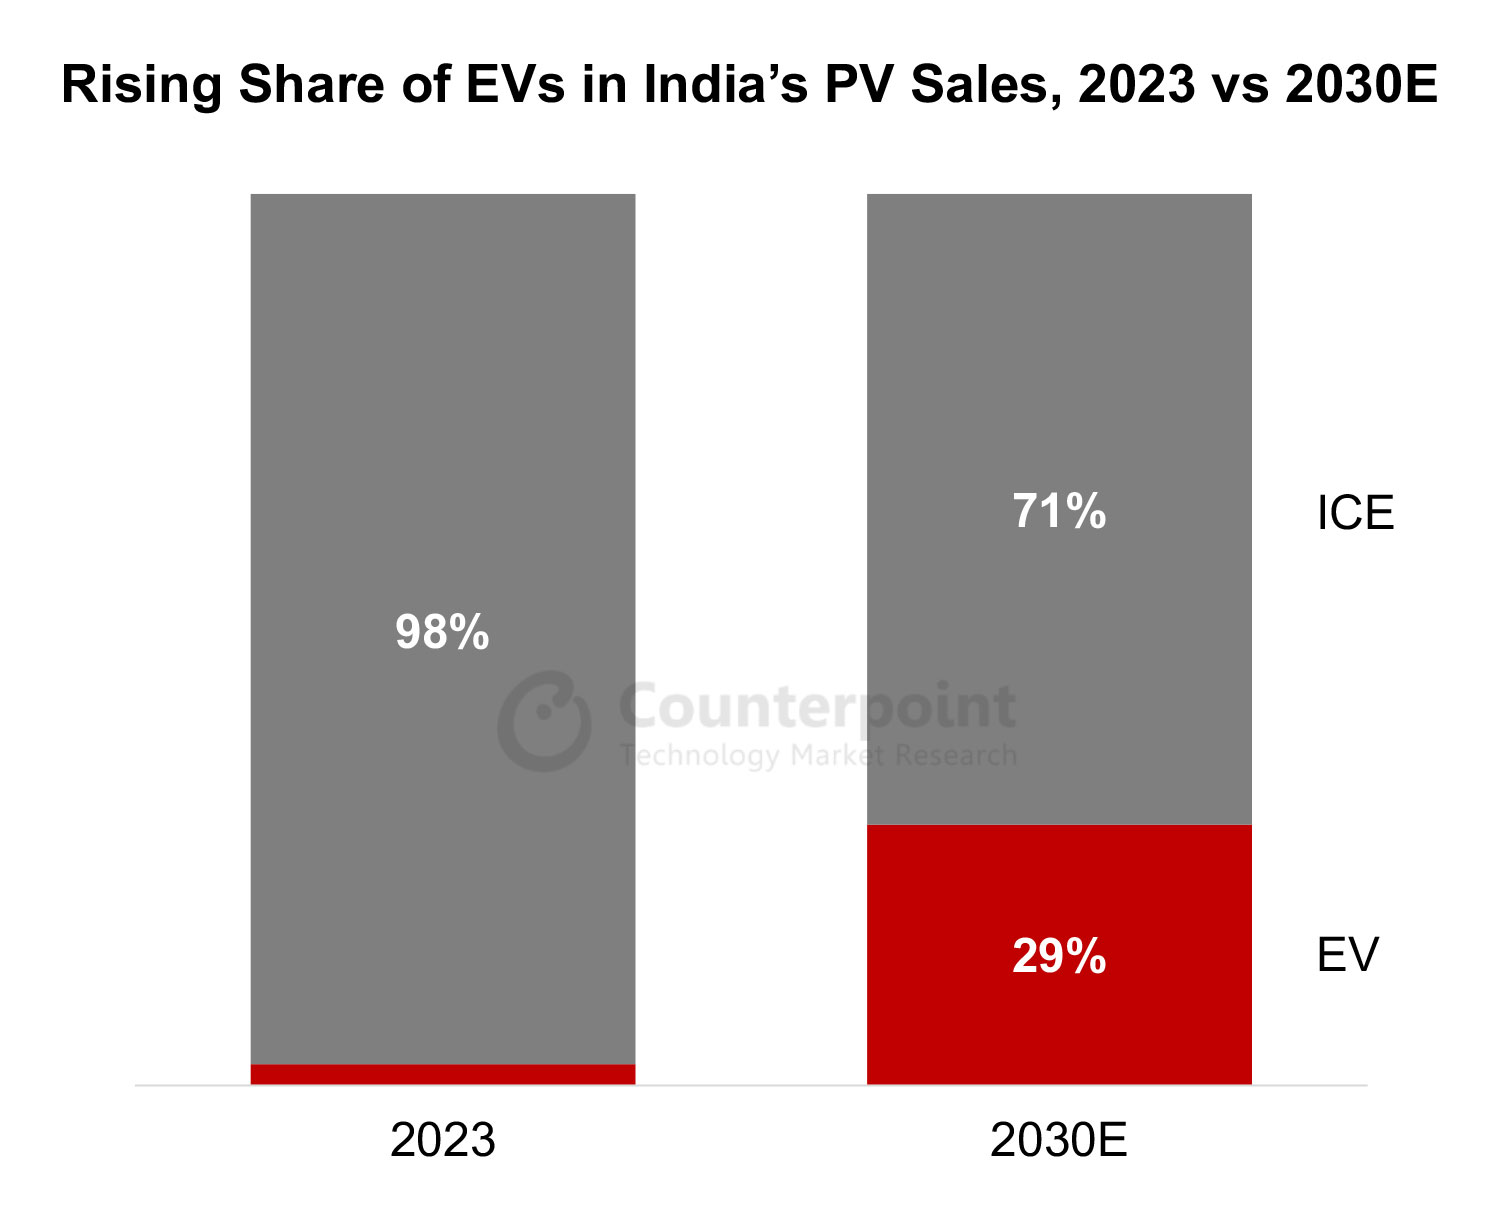 Rising share of EVs in India's PV sales, 2023 vs 2030E